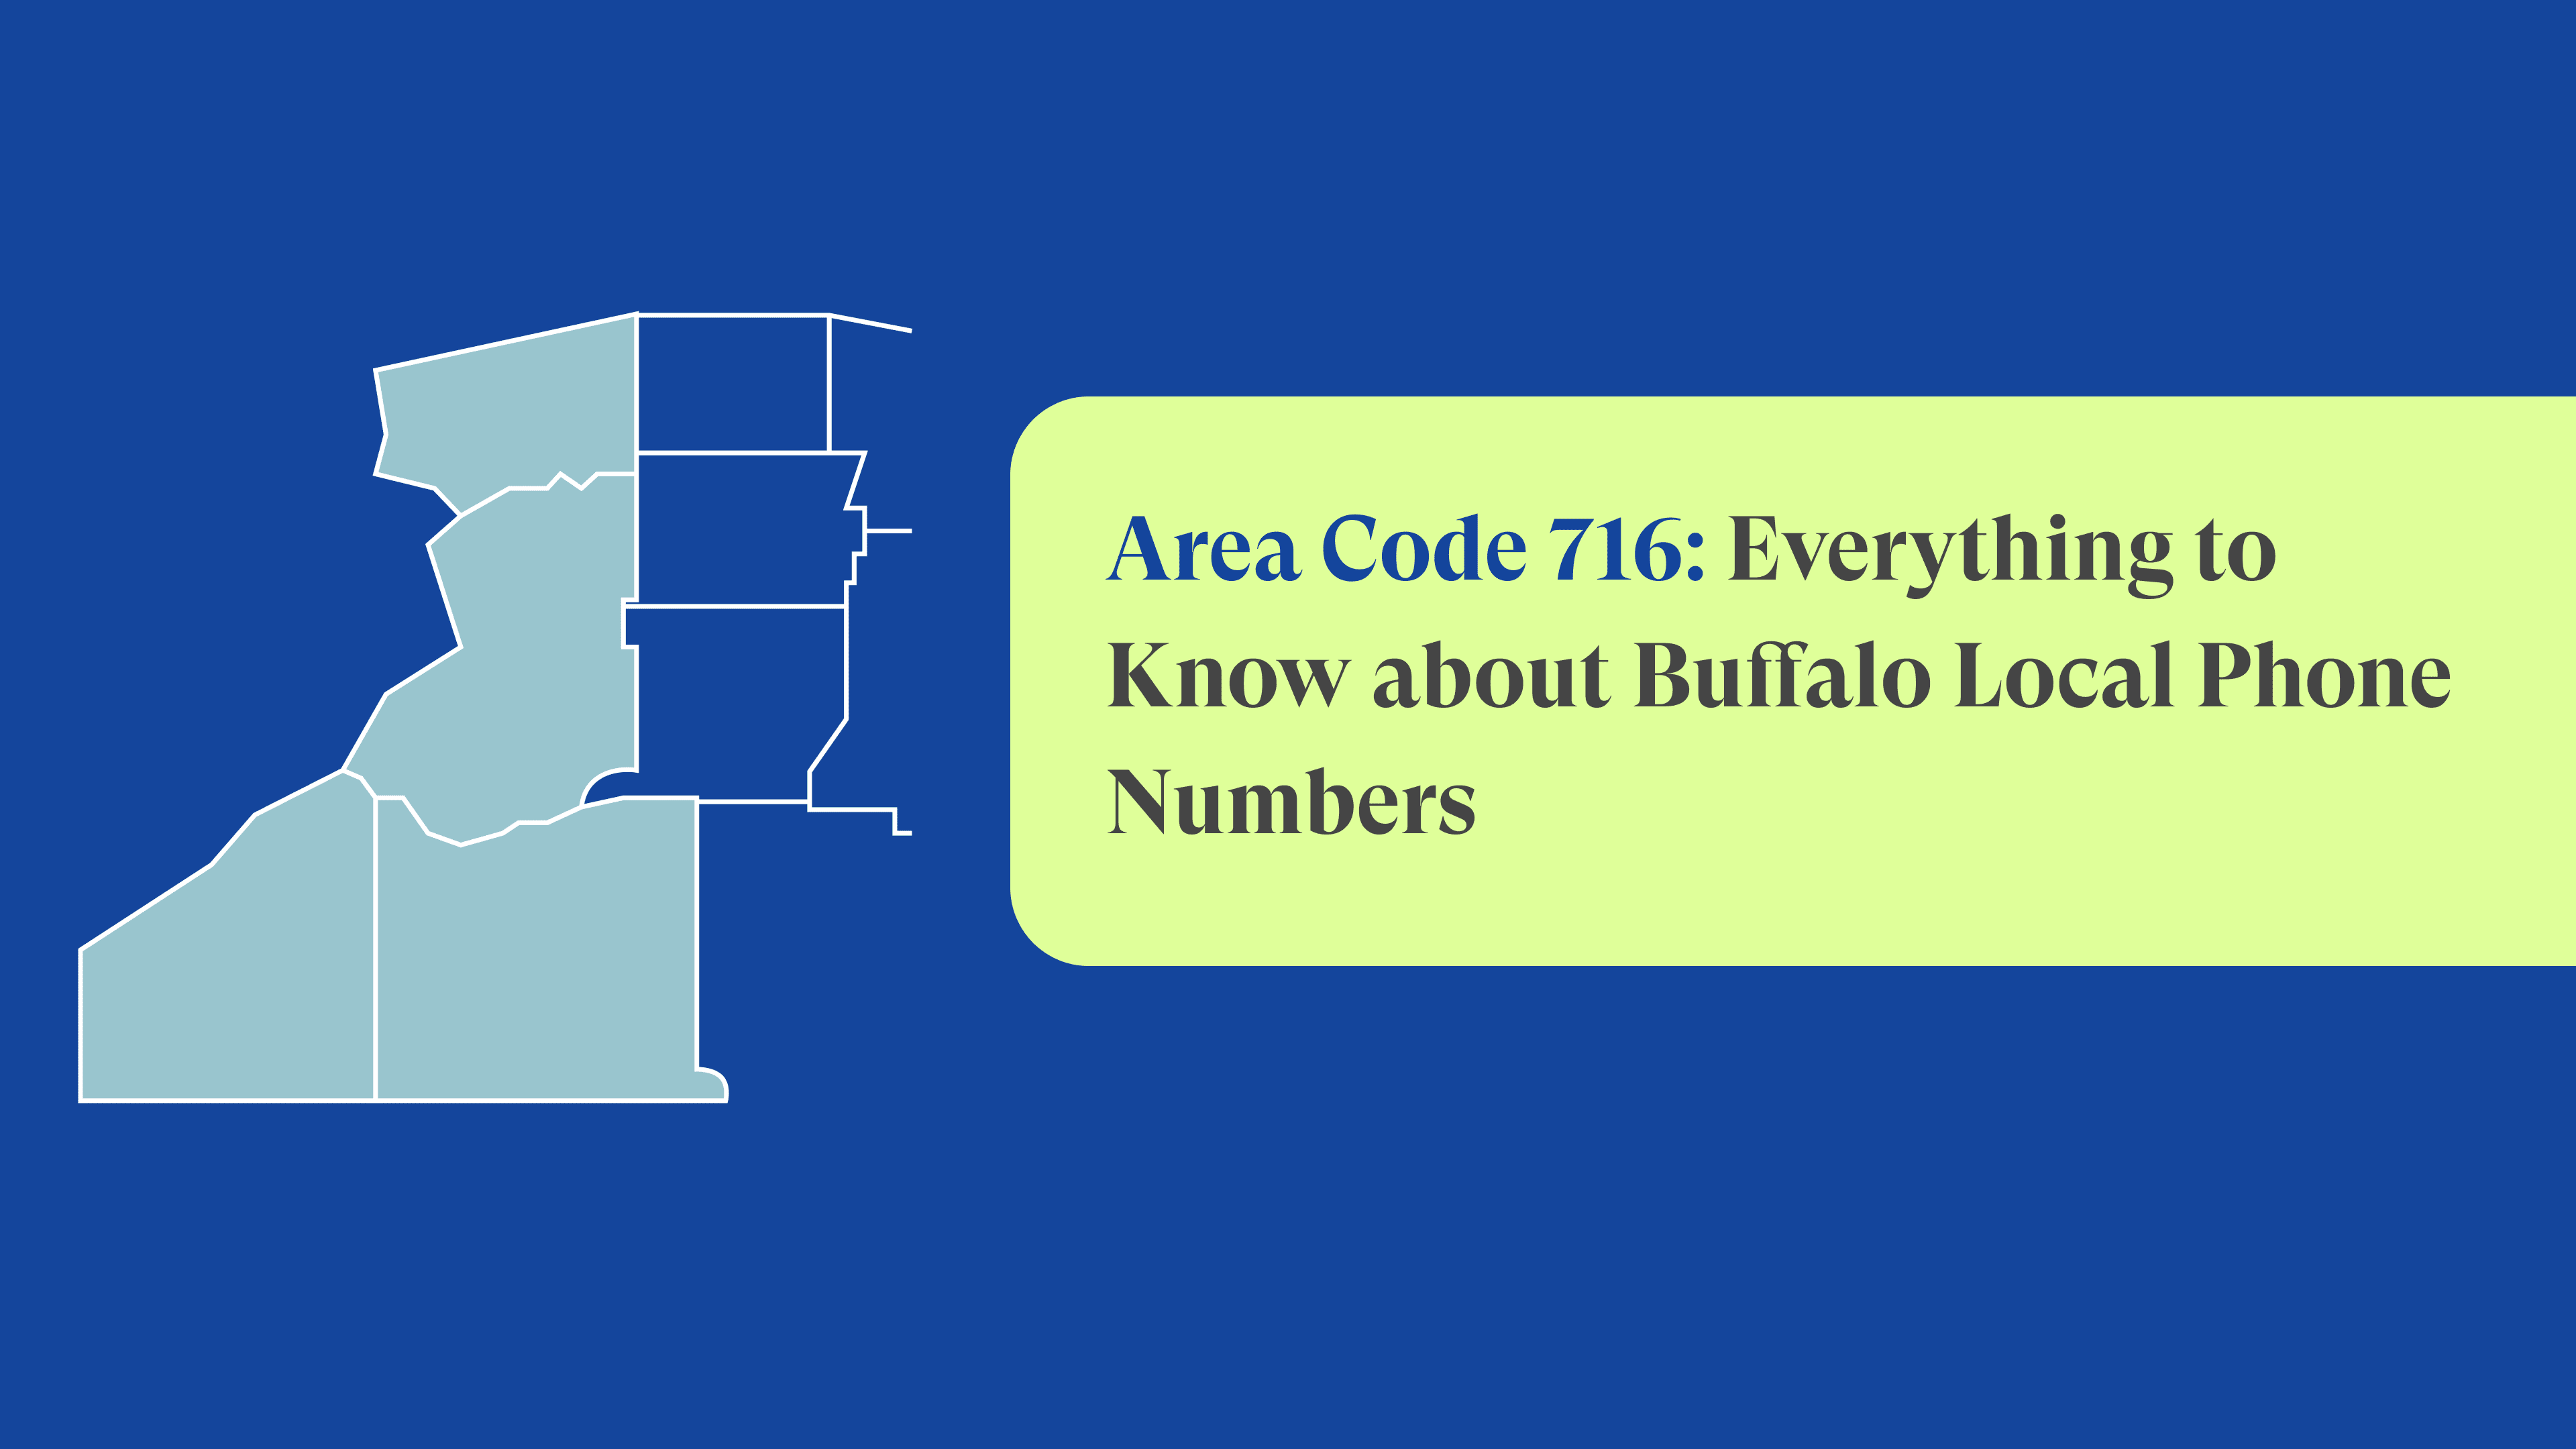 716 Area Code: Buffalo Local Phone Numbers